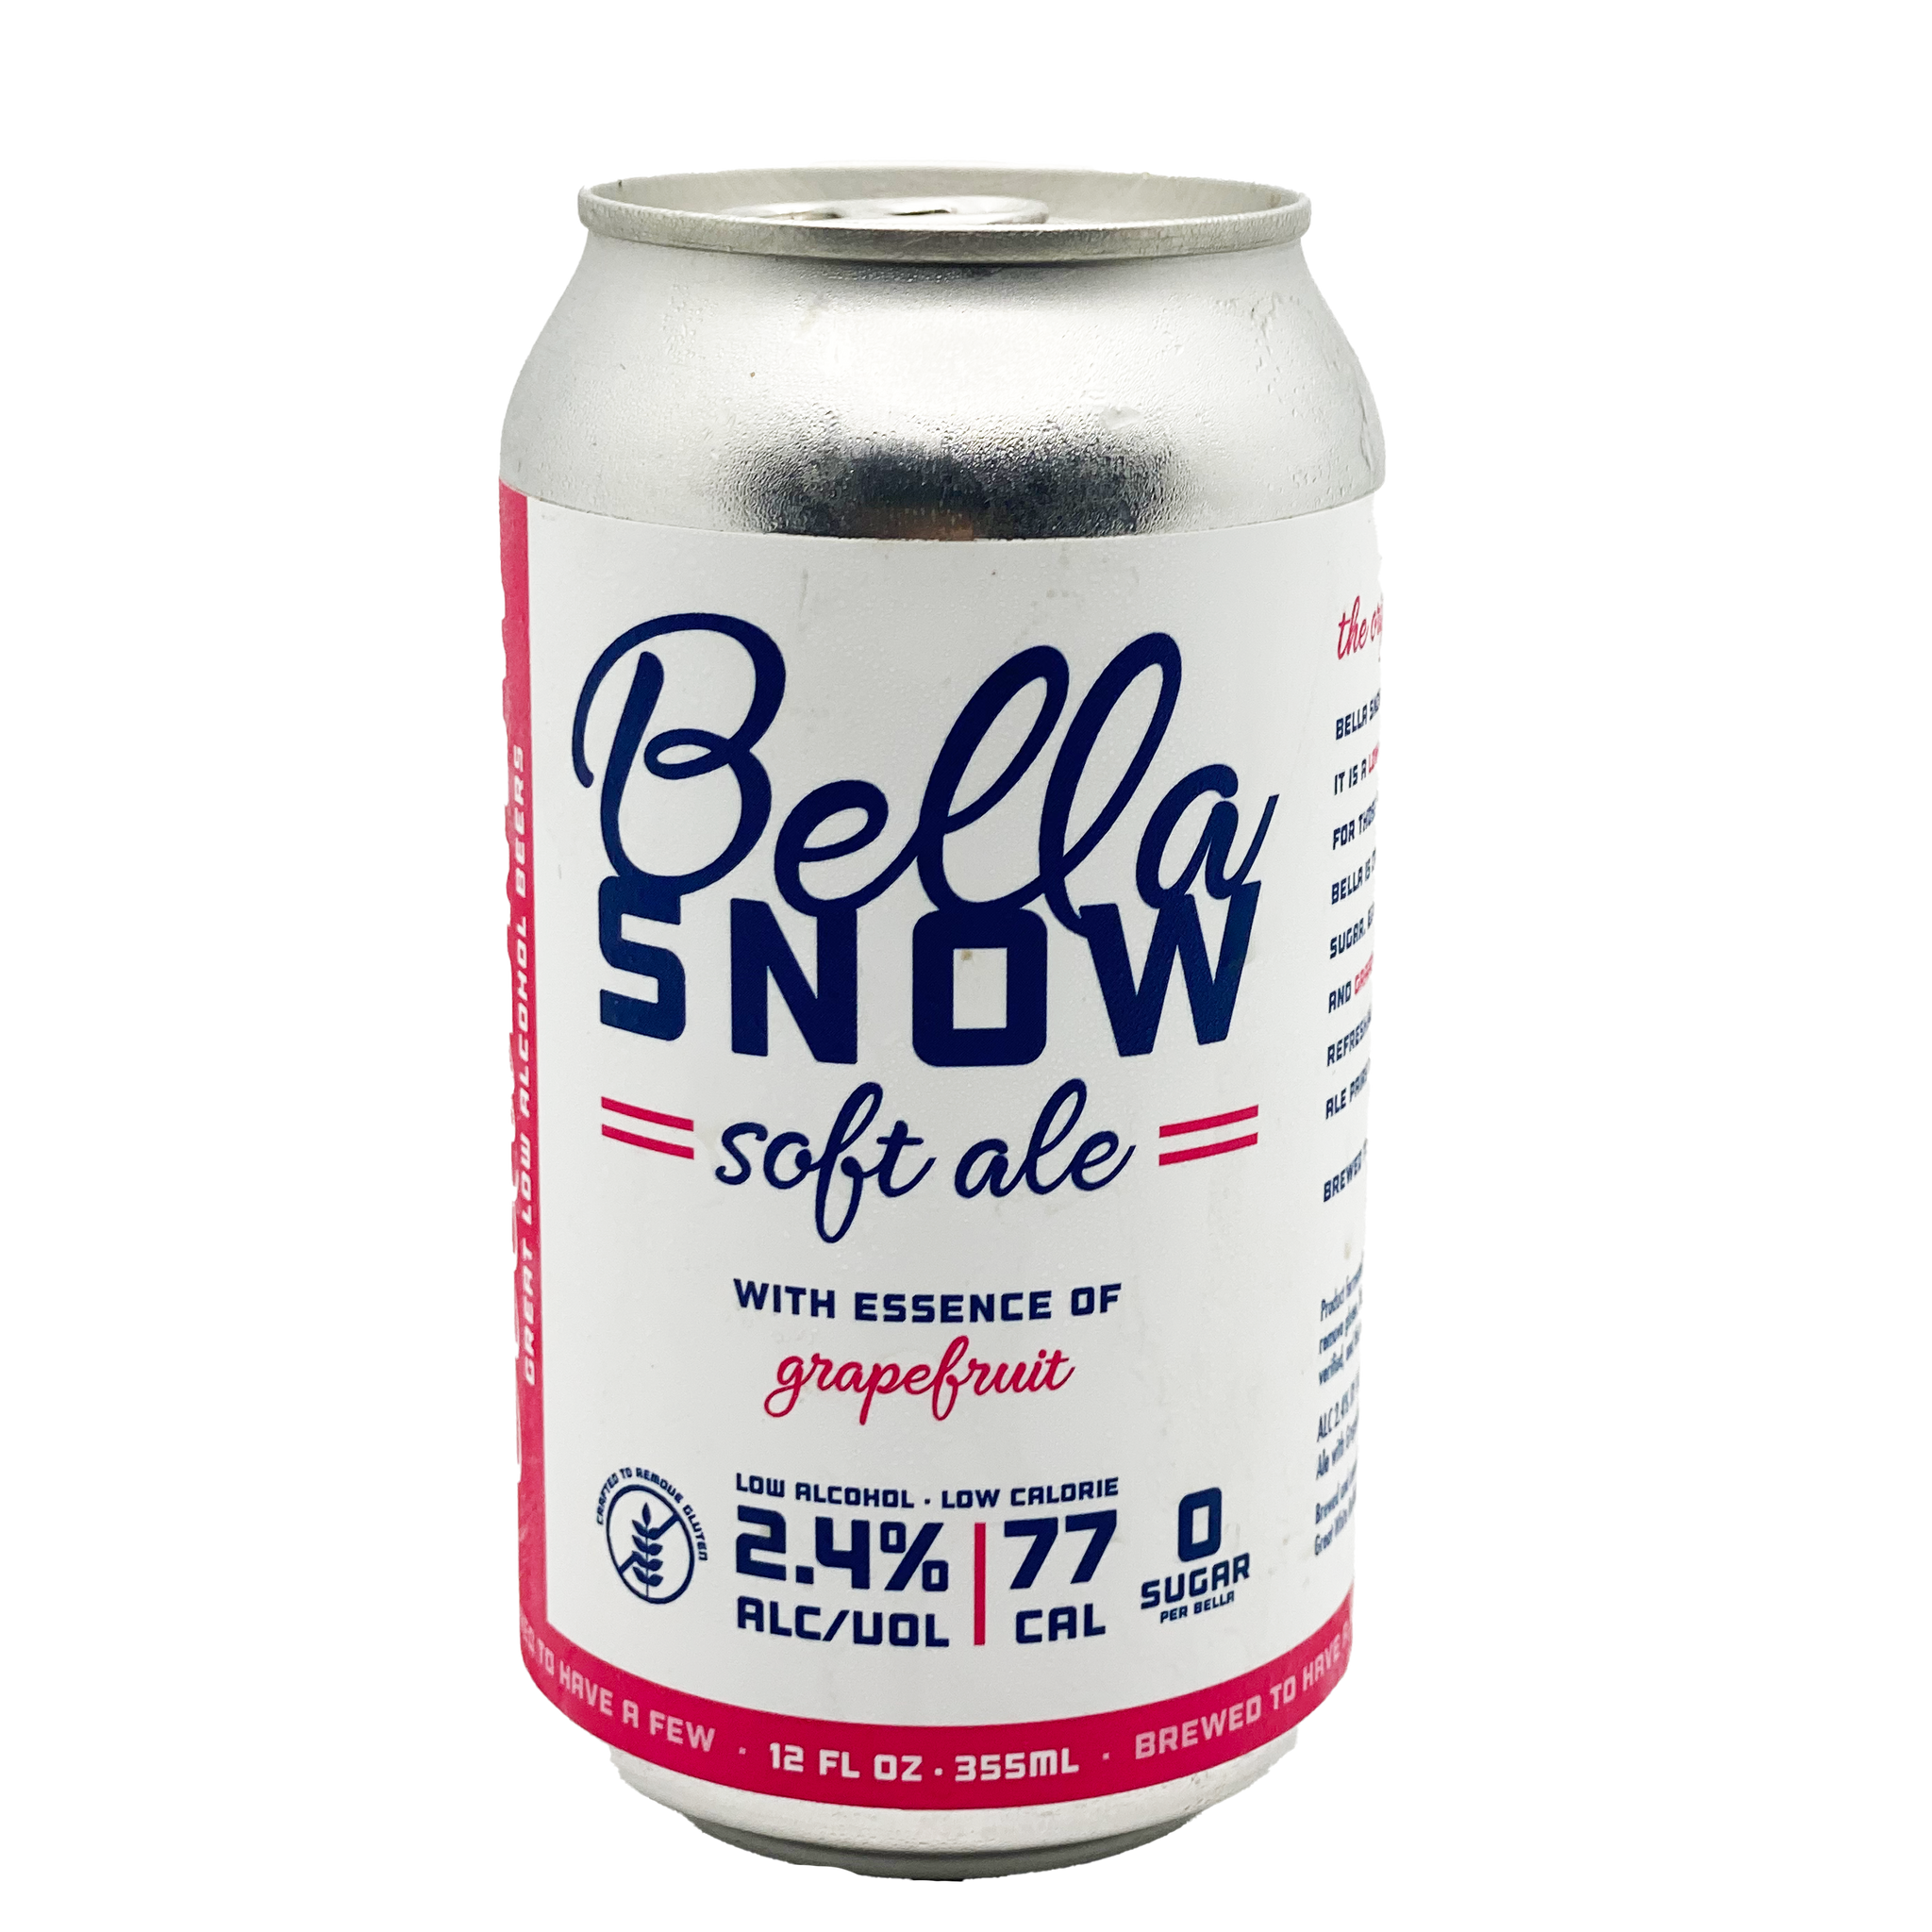 Bella Snow Soft Ale with Grapefruit